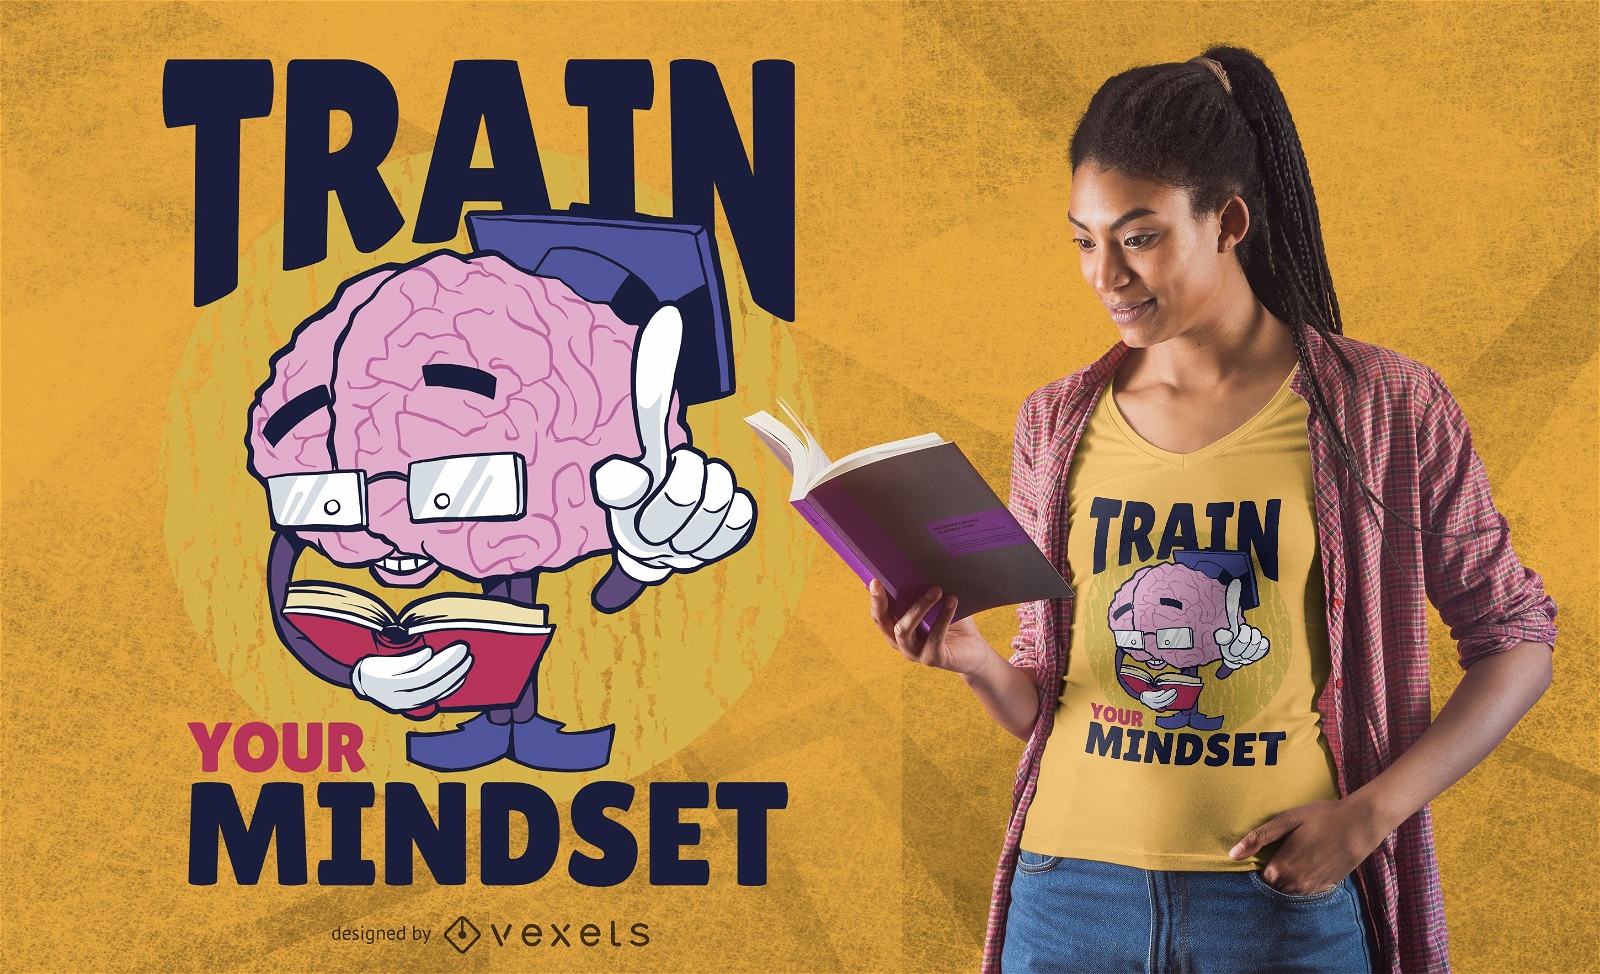 Train your mindset t-shirt design